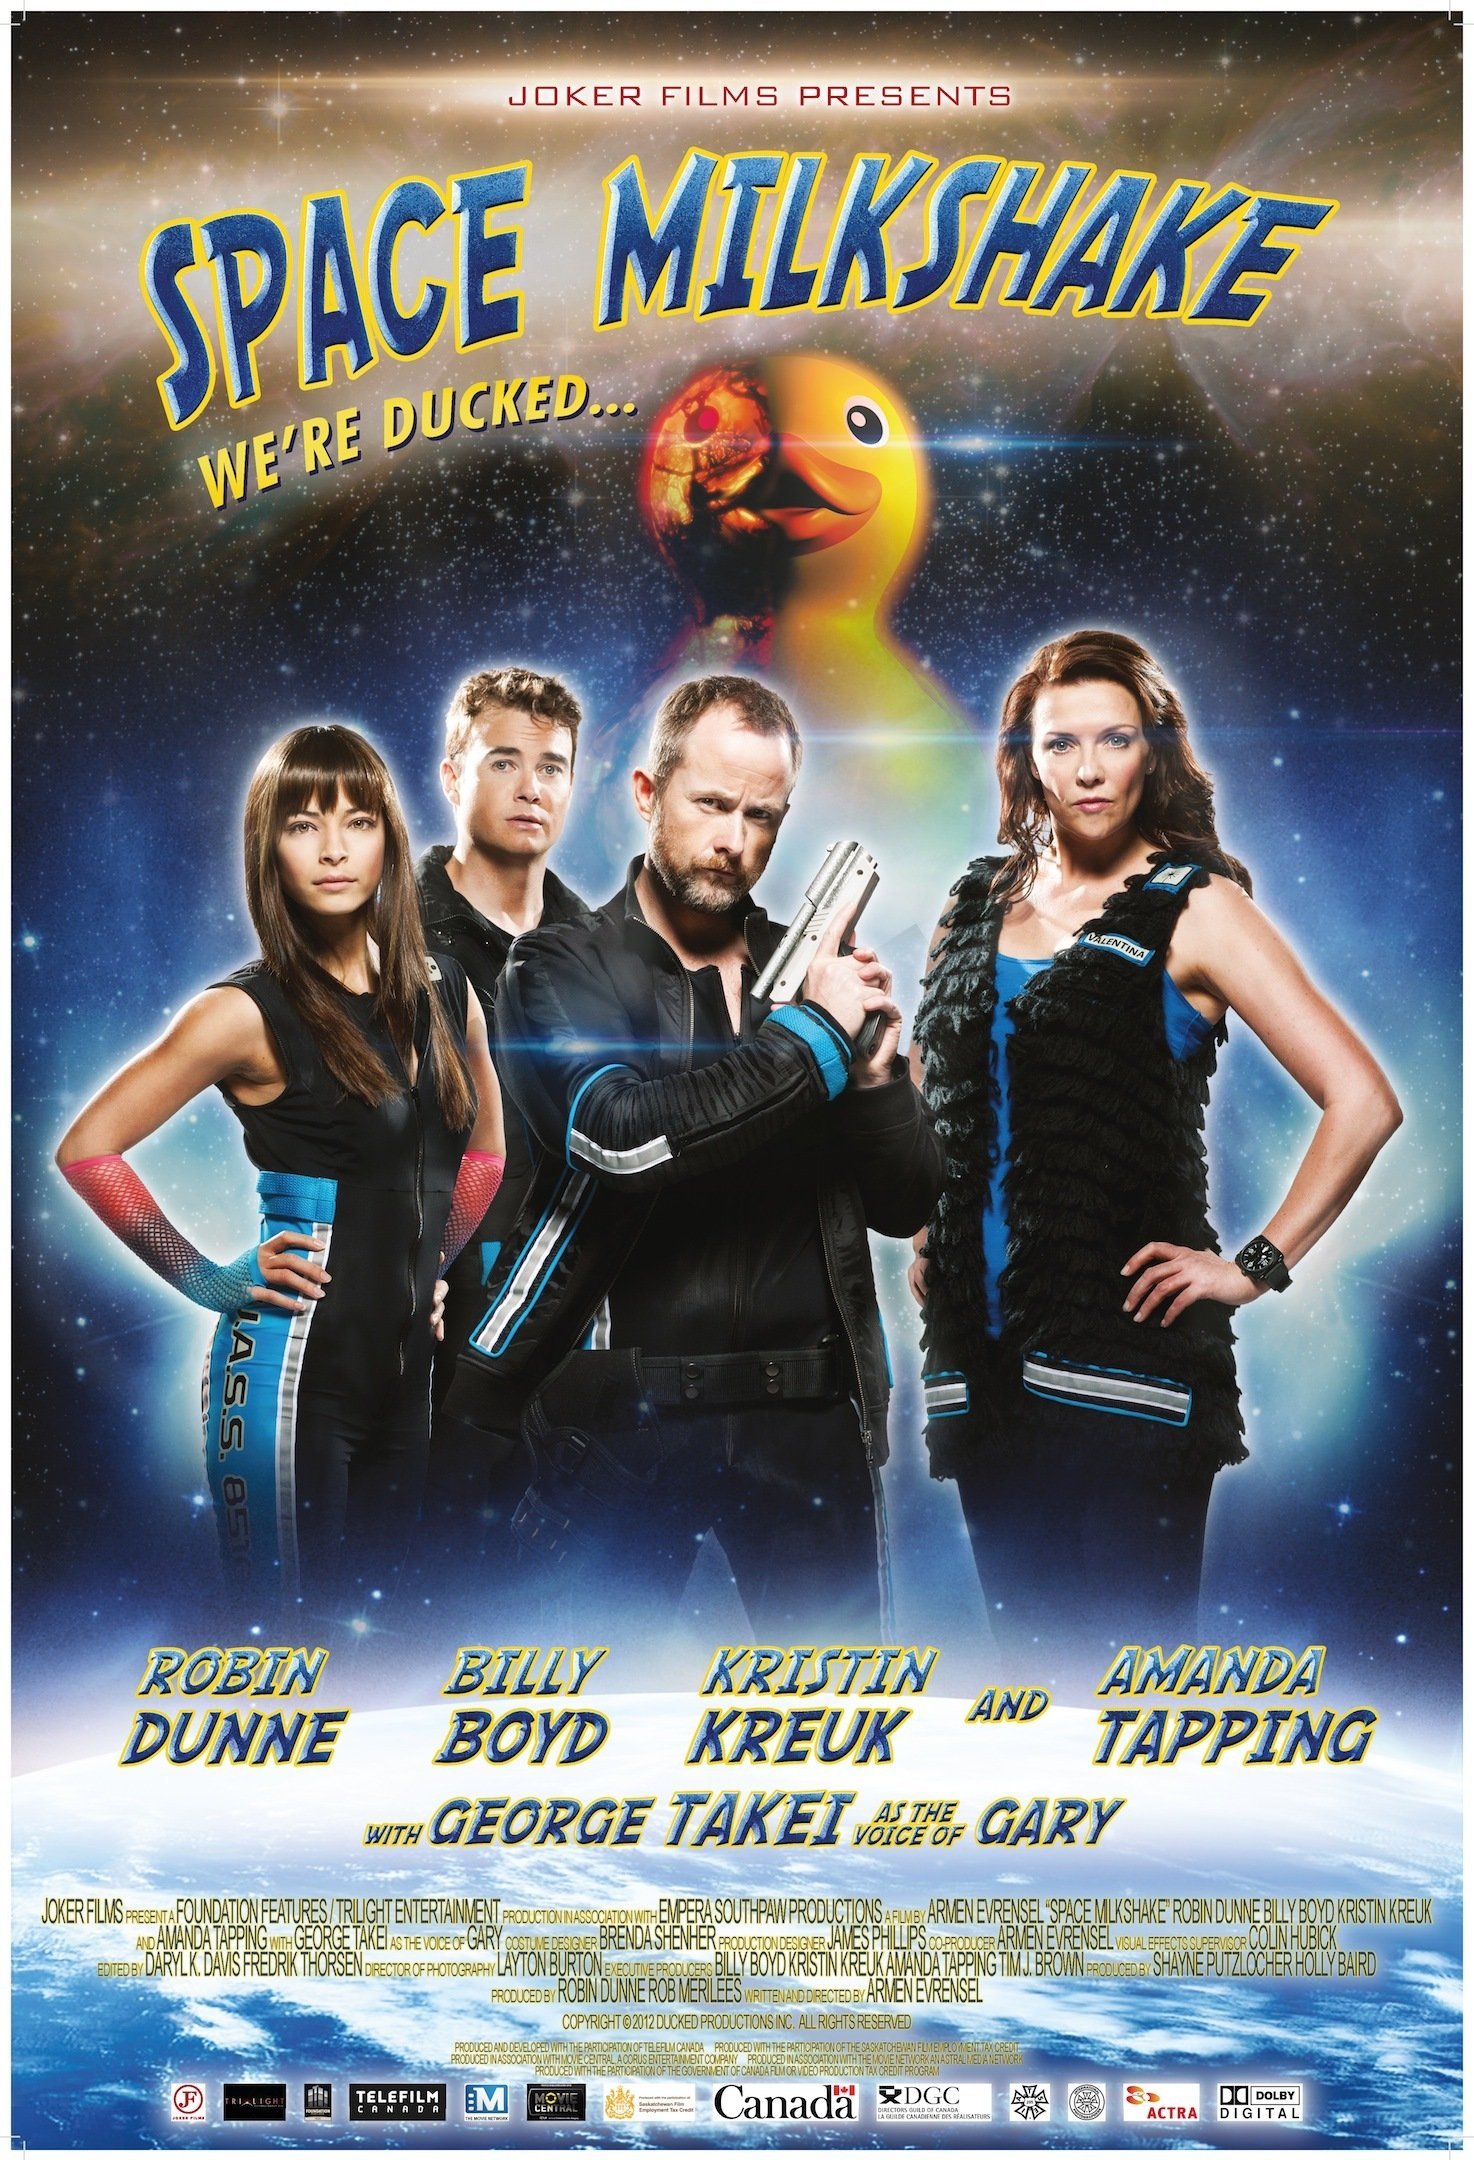 Poster of the movie Space Milkshake